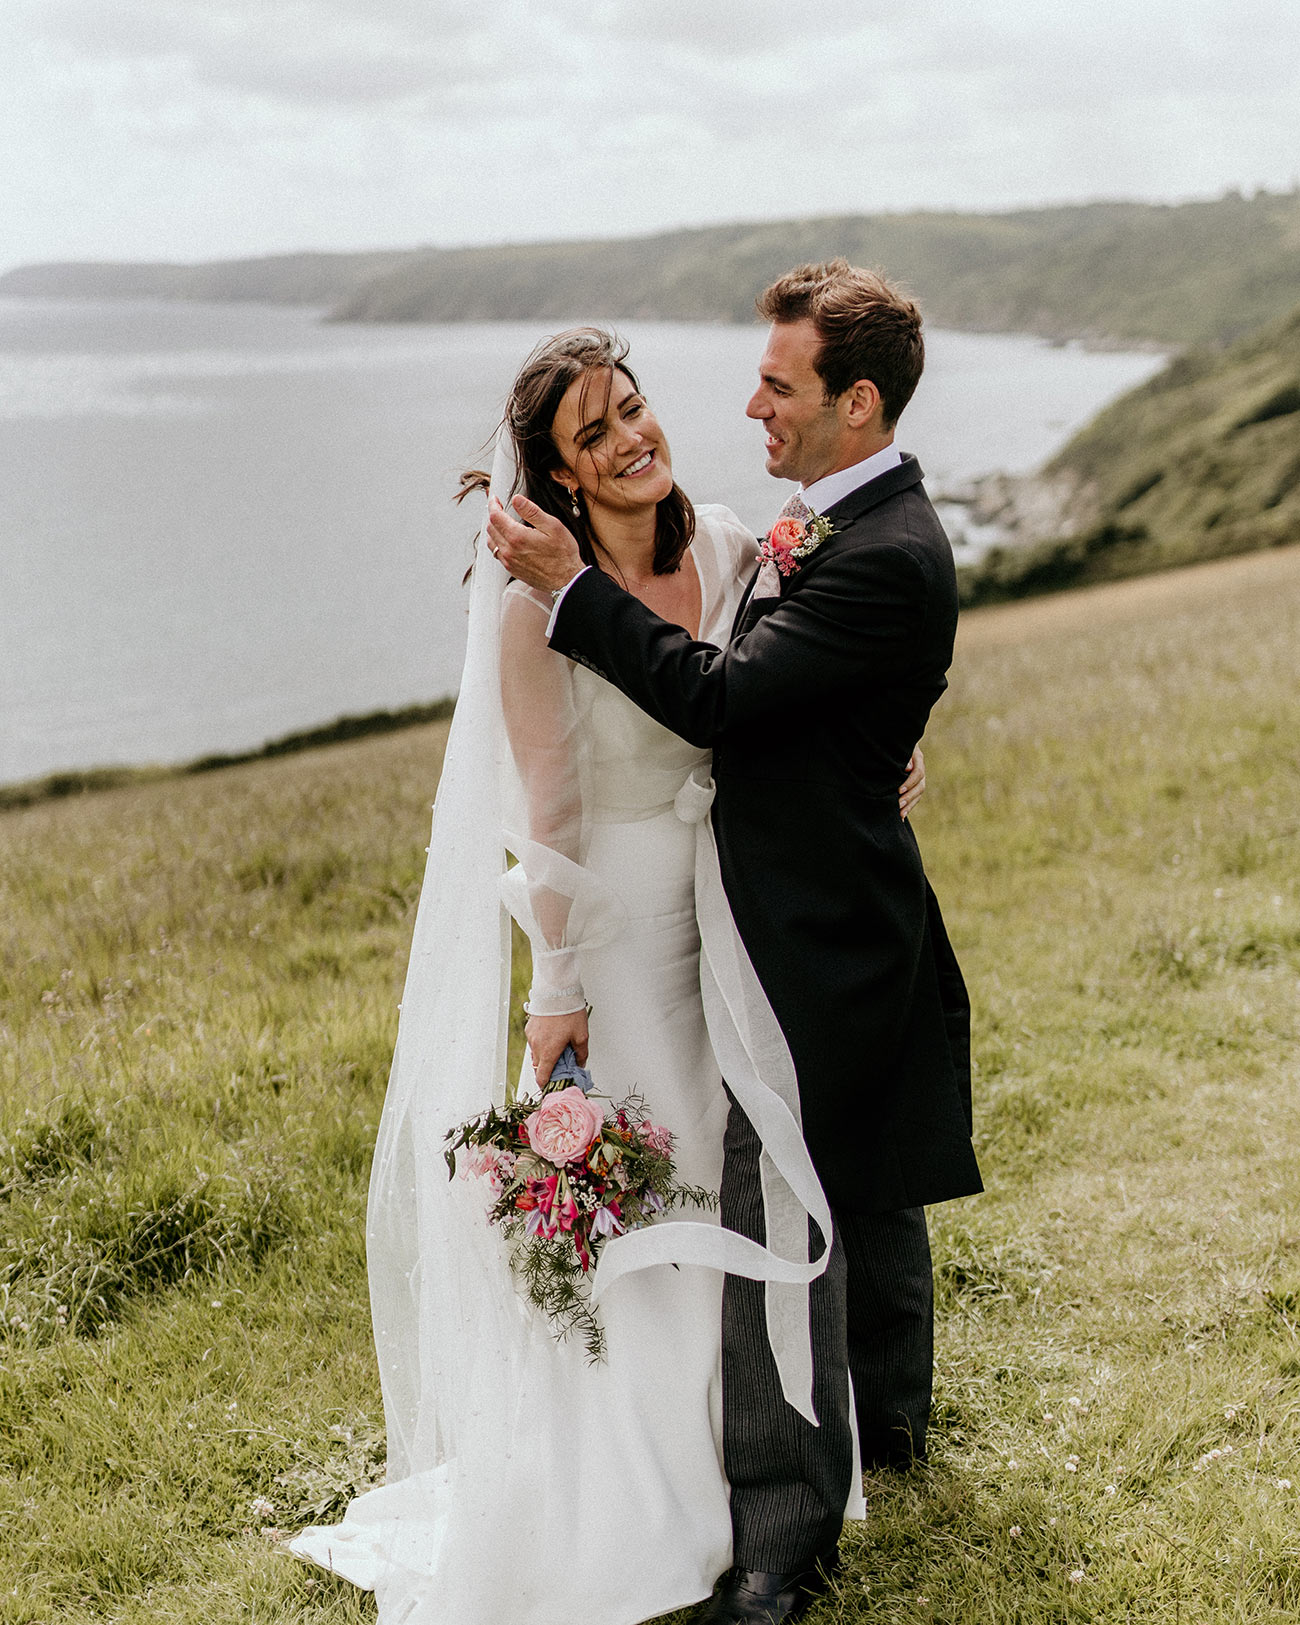 Kate Tom Real Wedding Cornwall Coastal Bride Groom3